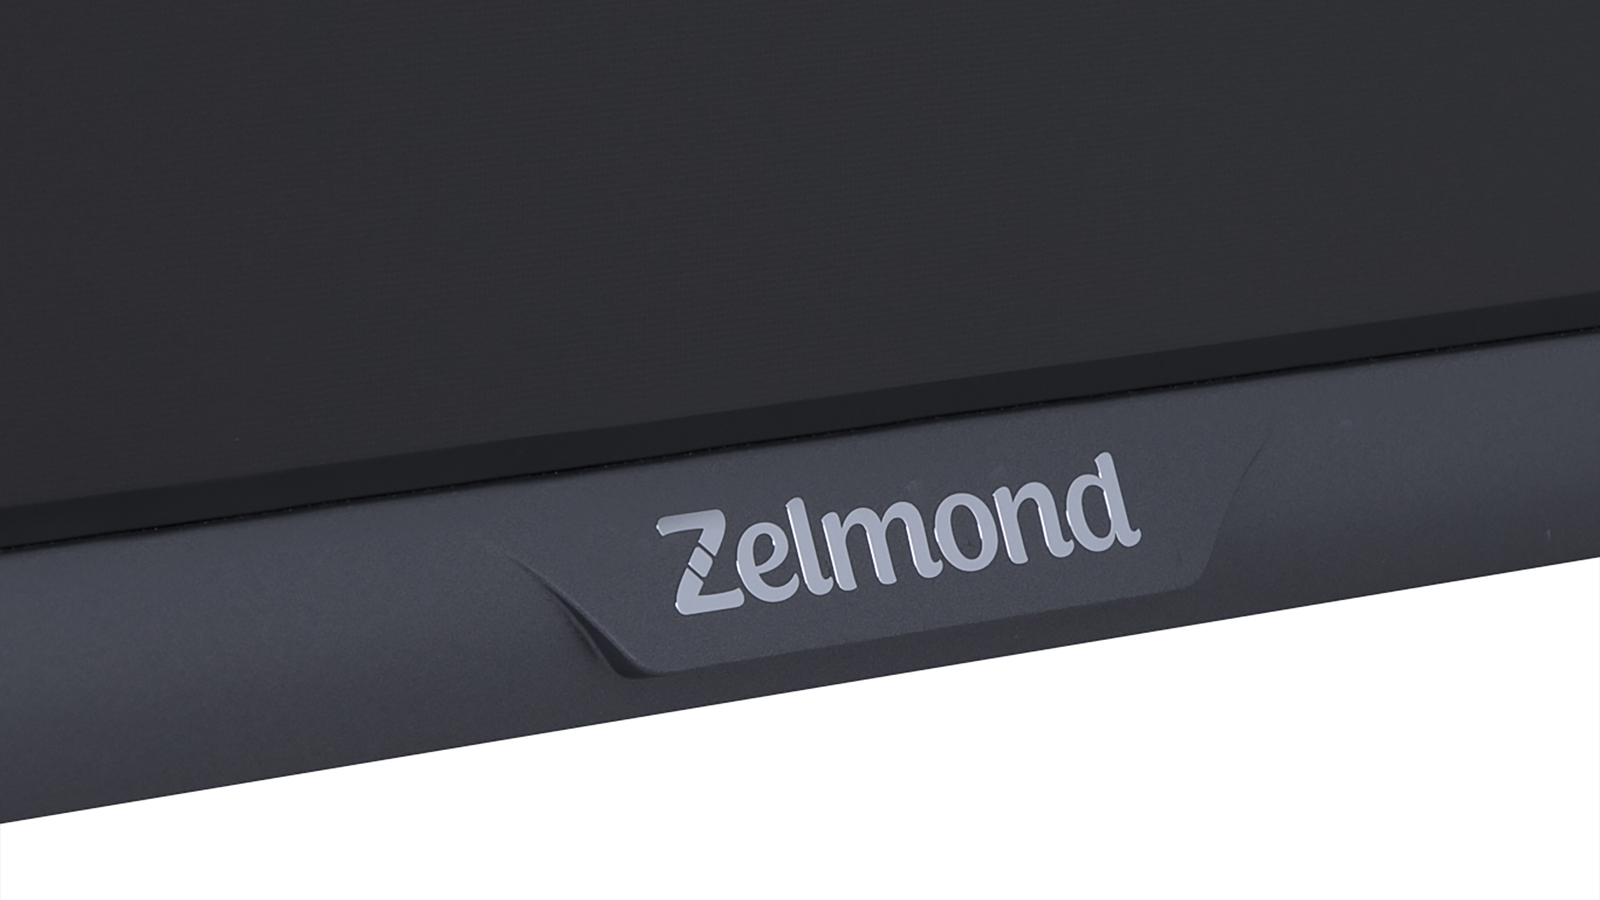 Zelmond PANA43FS2164 Smart 43inch TV